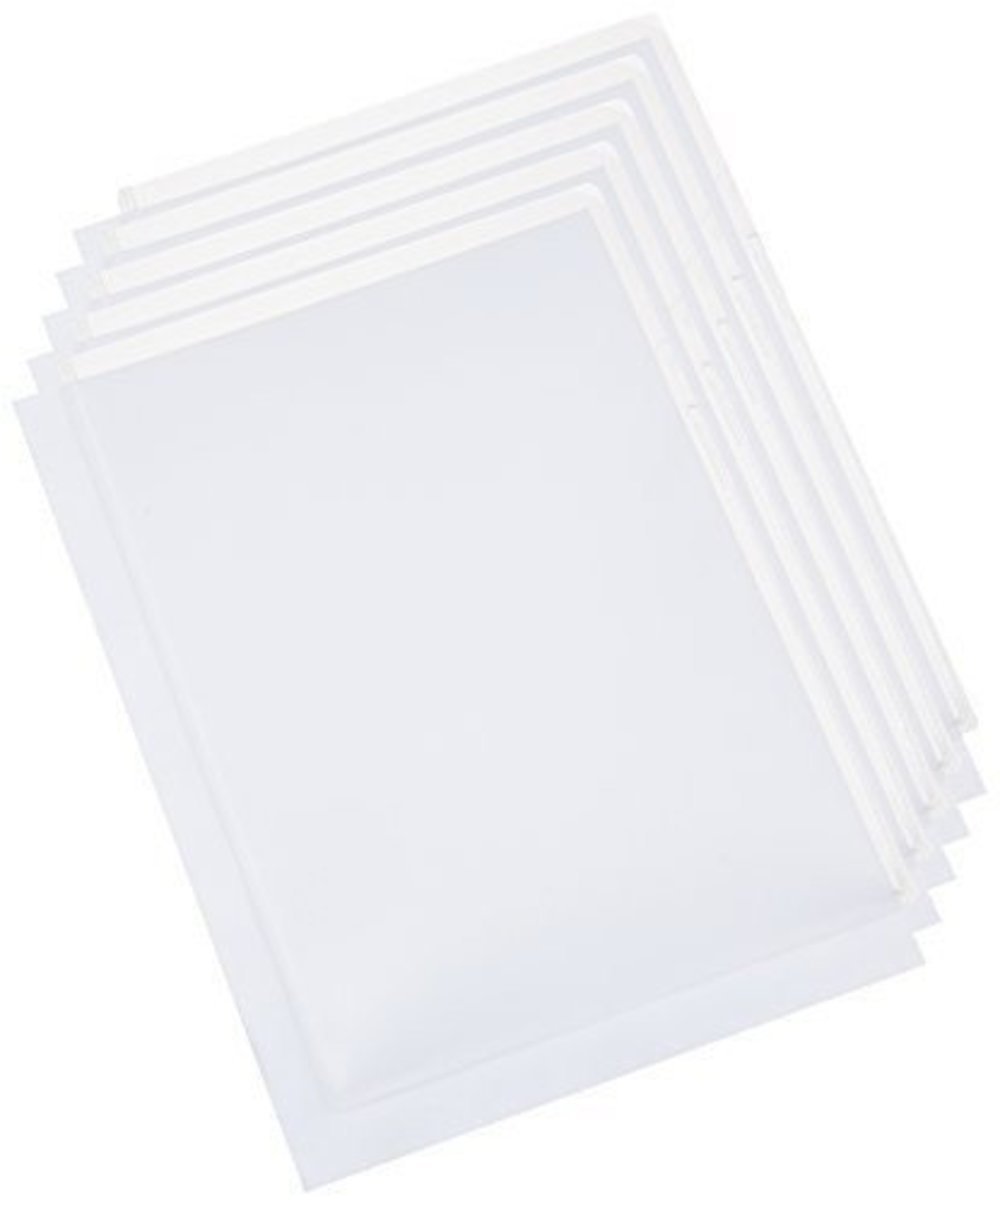  Produkttitel: BROTHER Trägerbogen CS-CA001 für Plastikkarten (5 Stück) | Kompatibel mit Dokumentenscanner ADS-2100 - 2600W